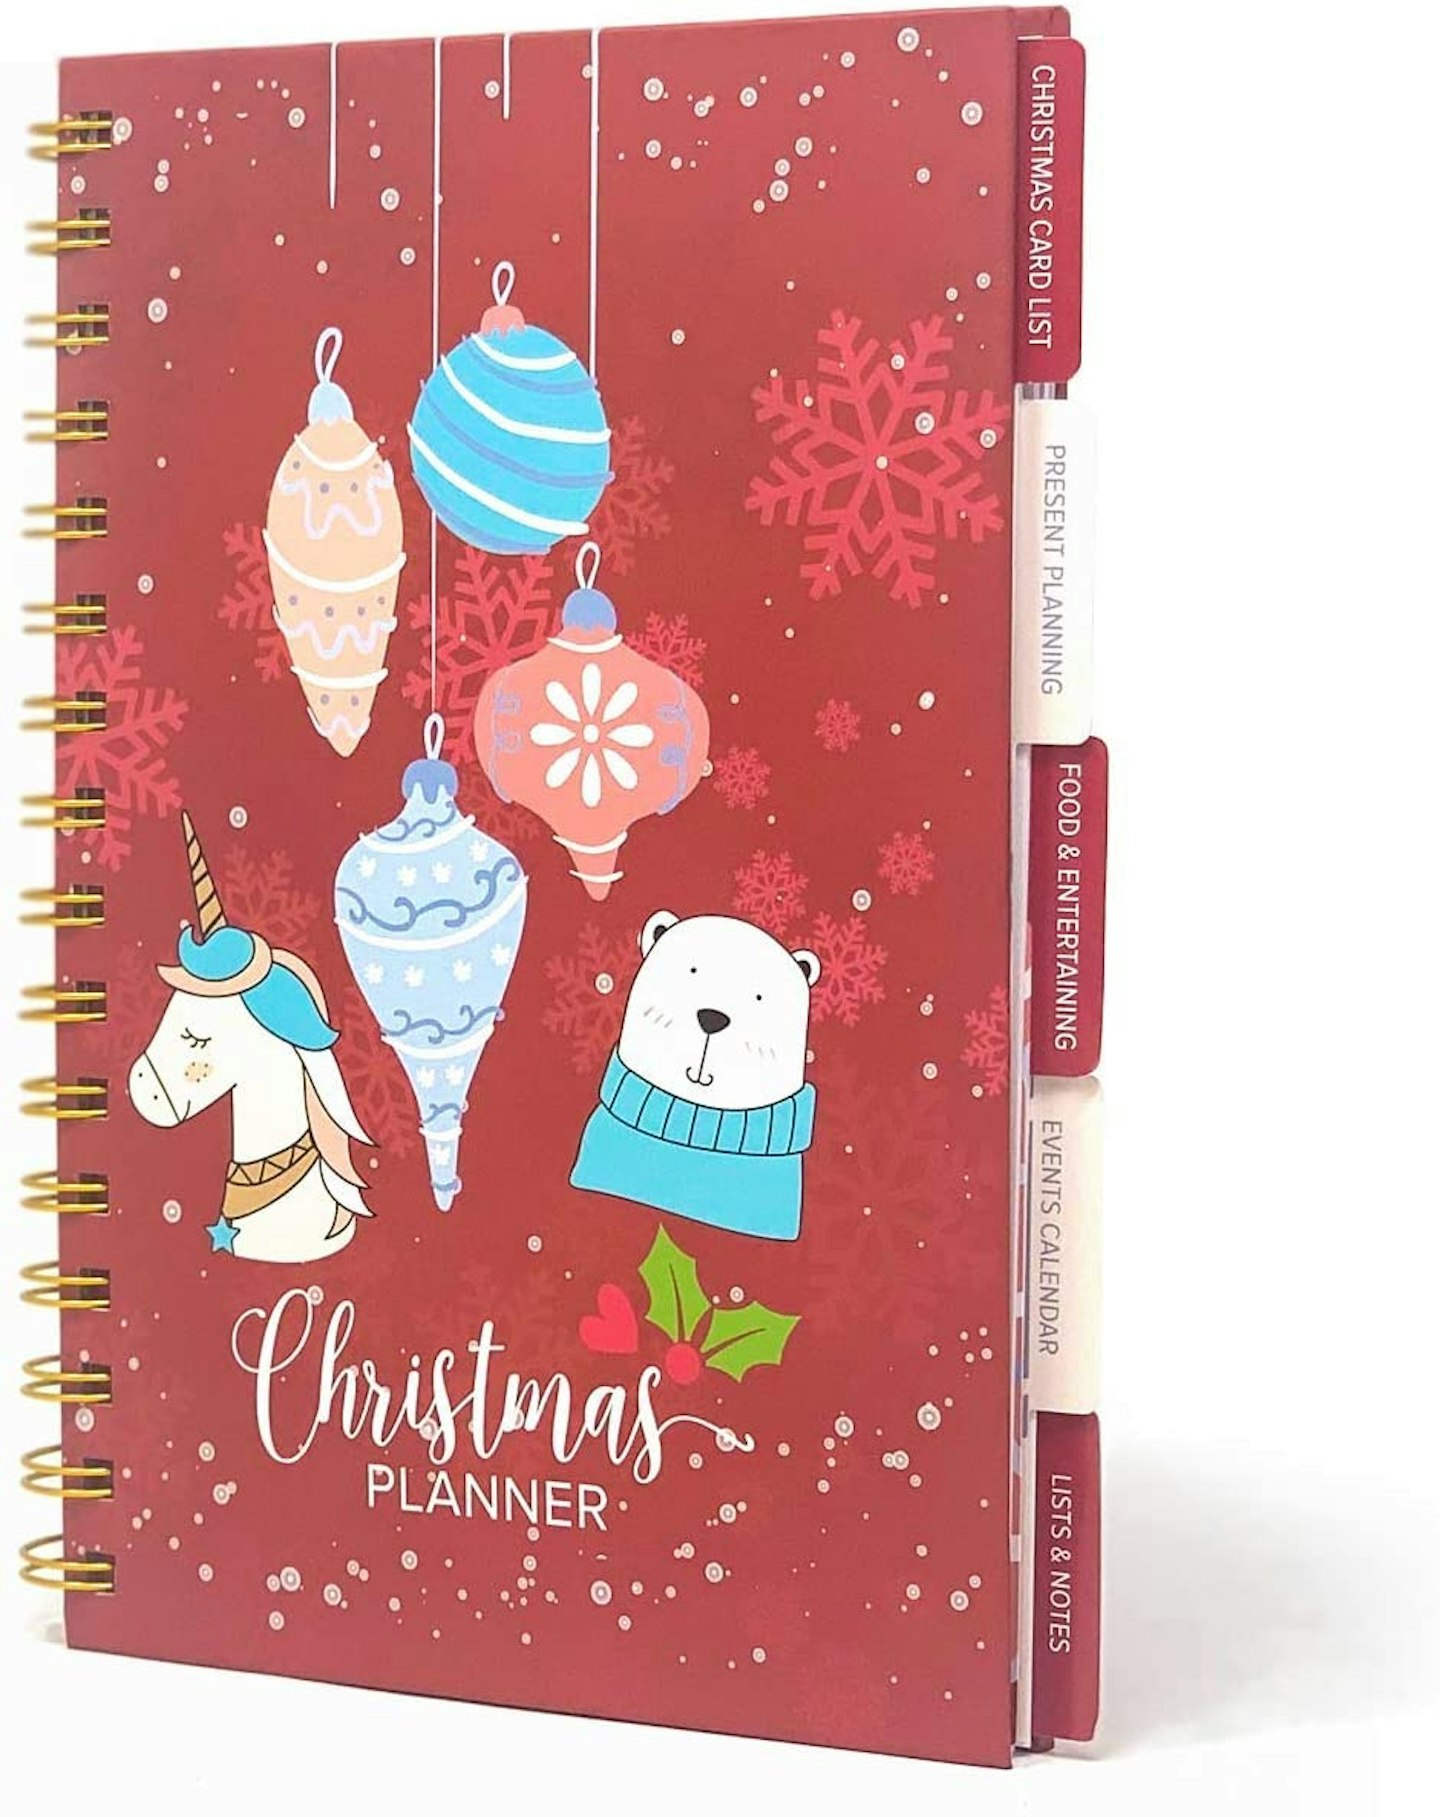 Best Christmas planner:  Christmas planner book